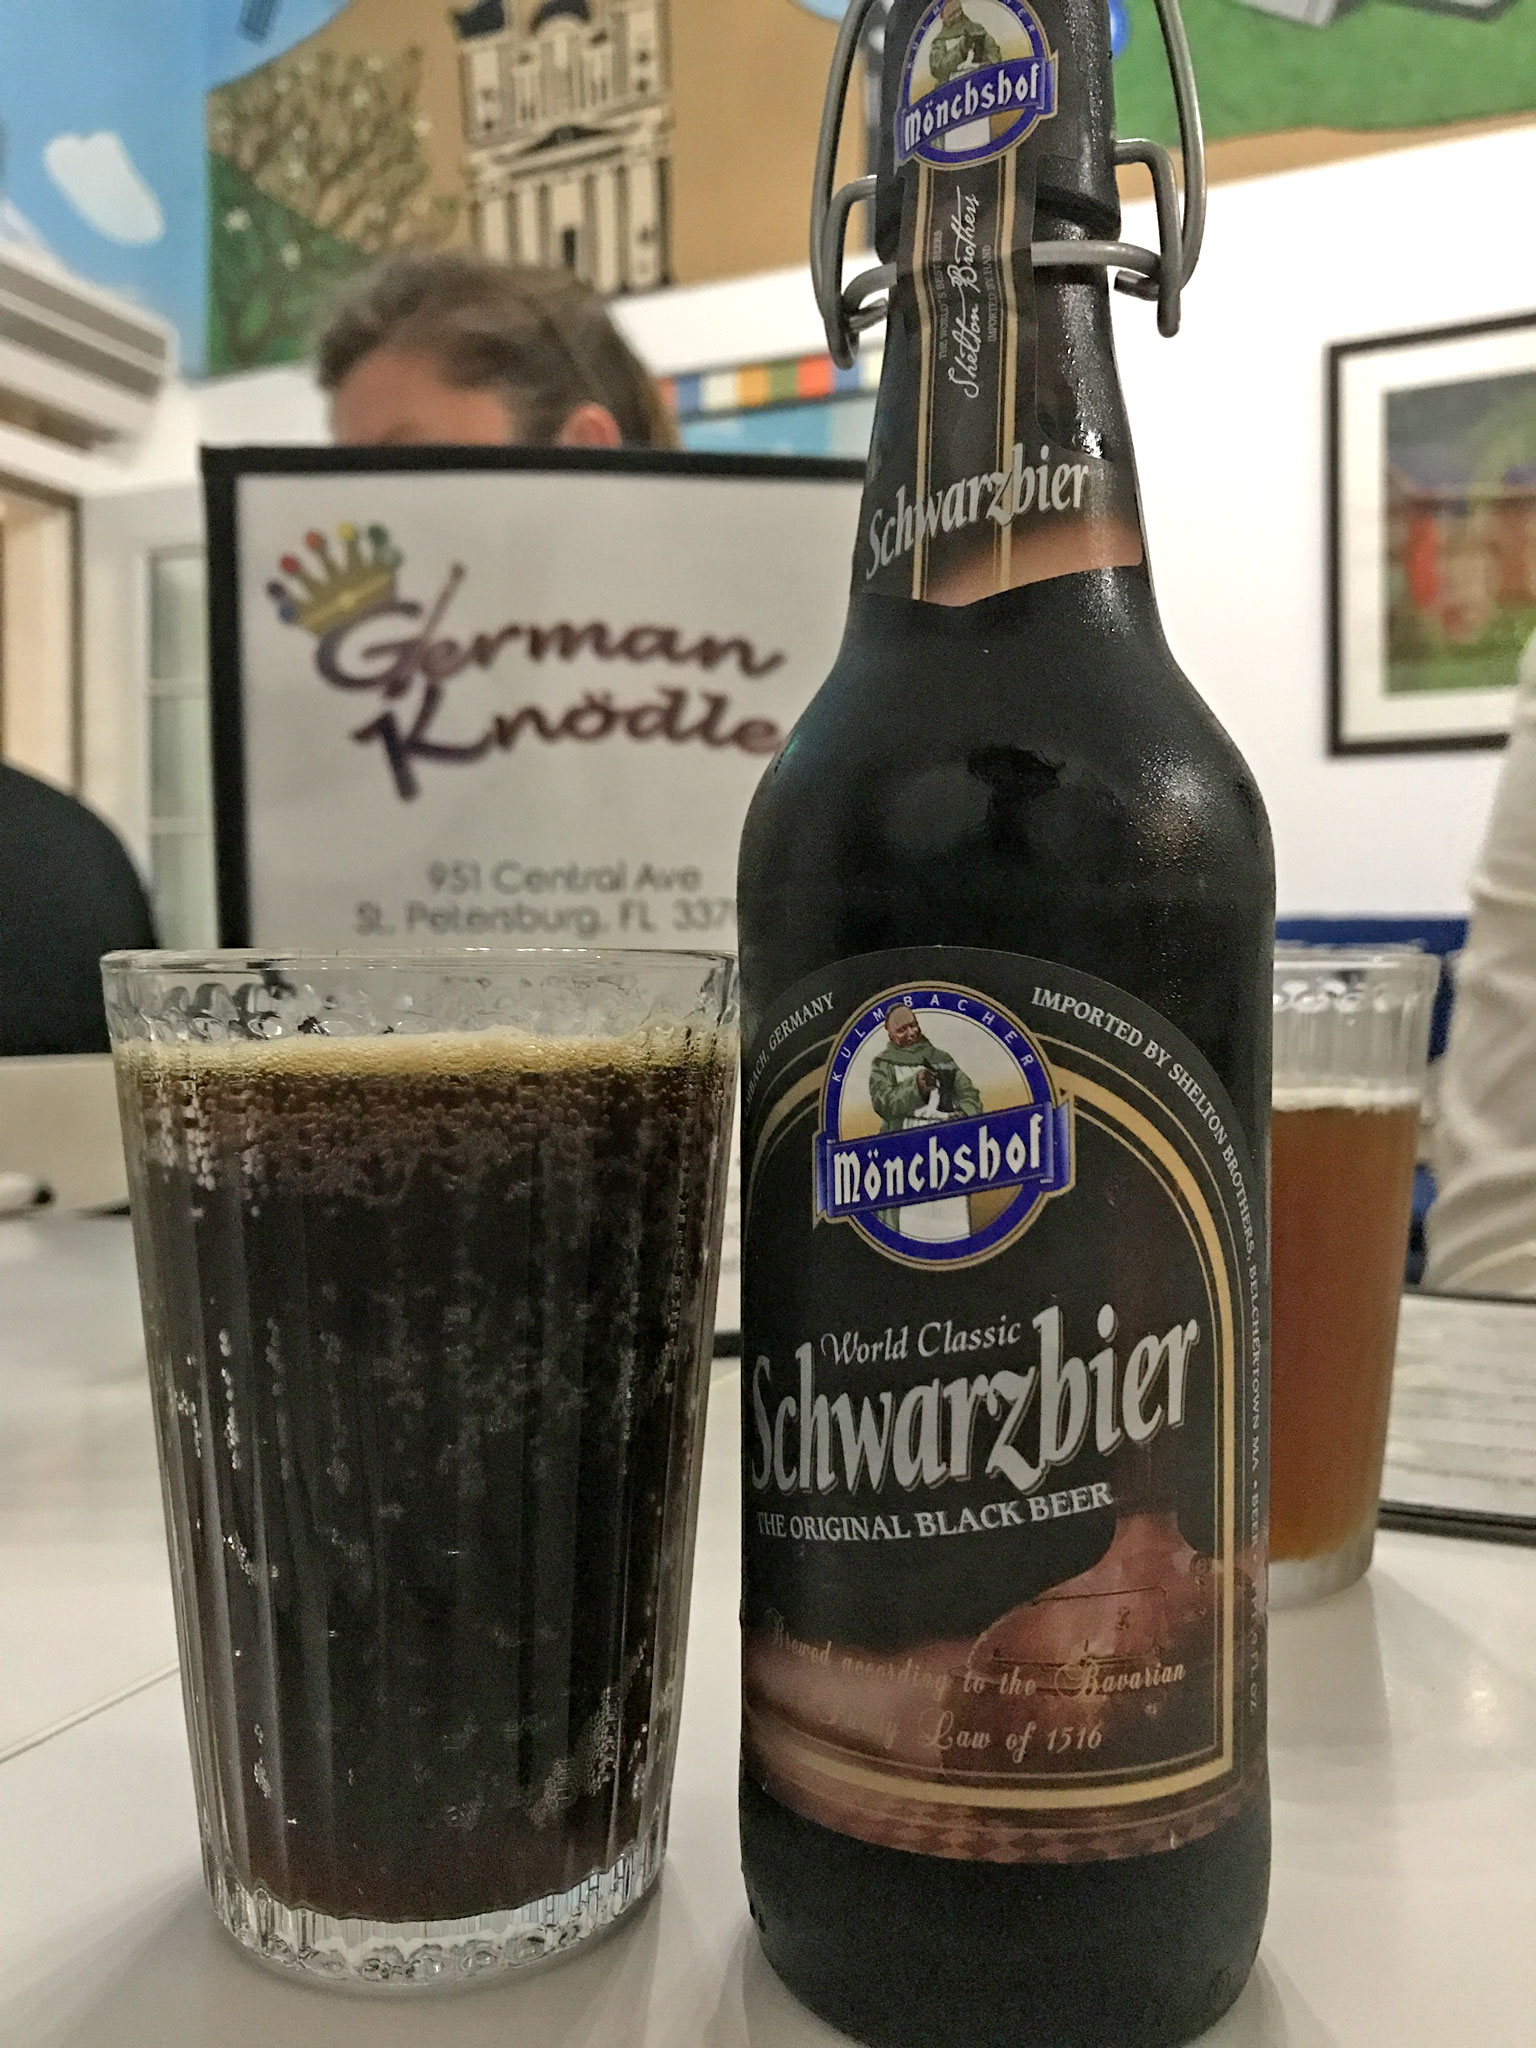 Schwarzbier